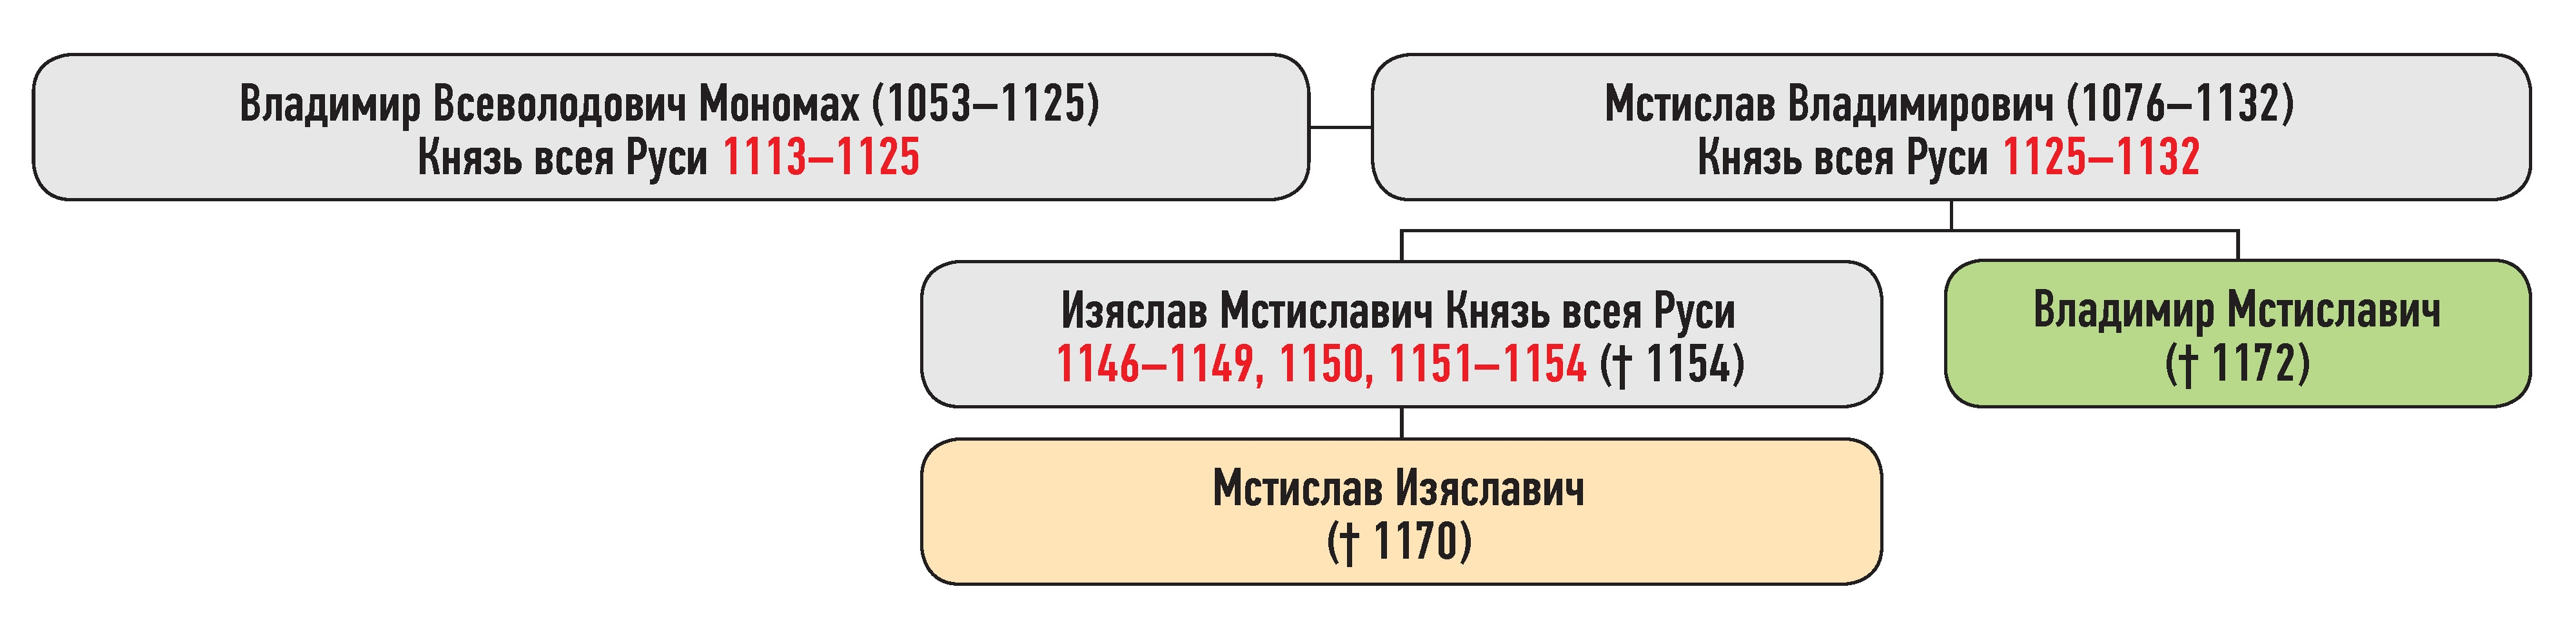 Генеалогическая схема к усобице Владимира Мстиславича и Мстислава Изяславича летом 1156 г.